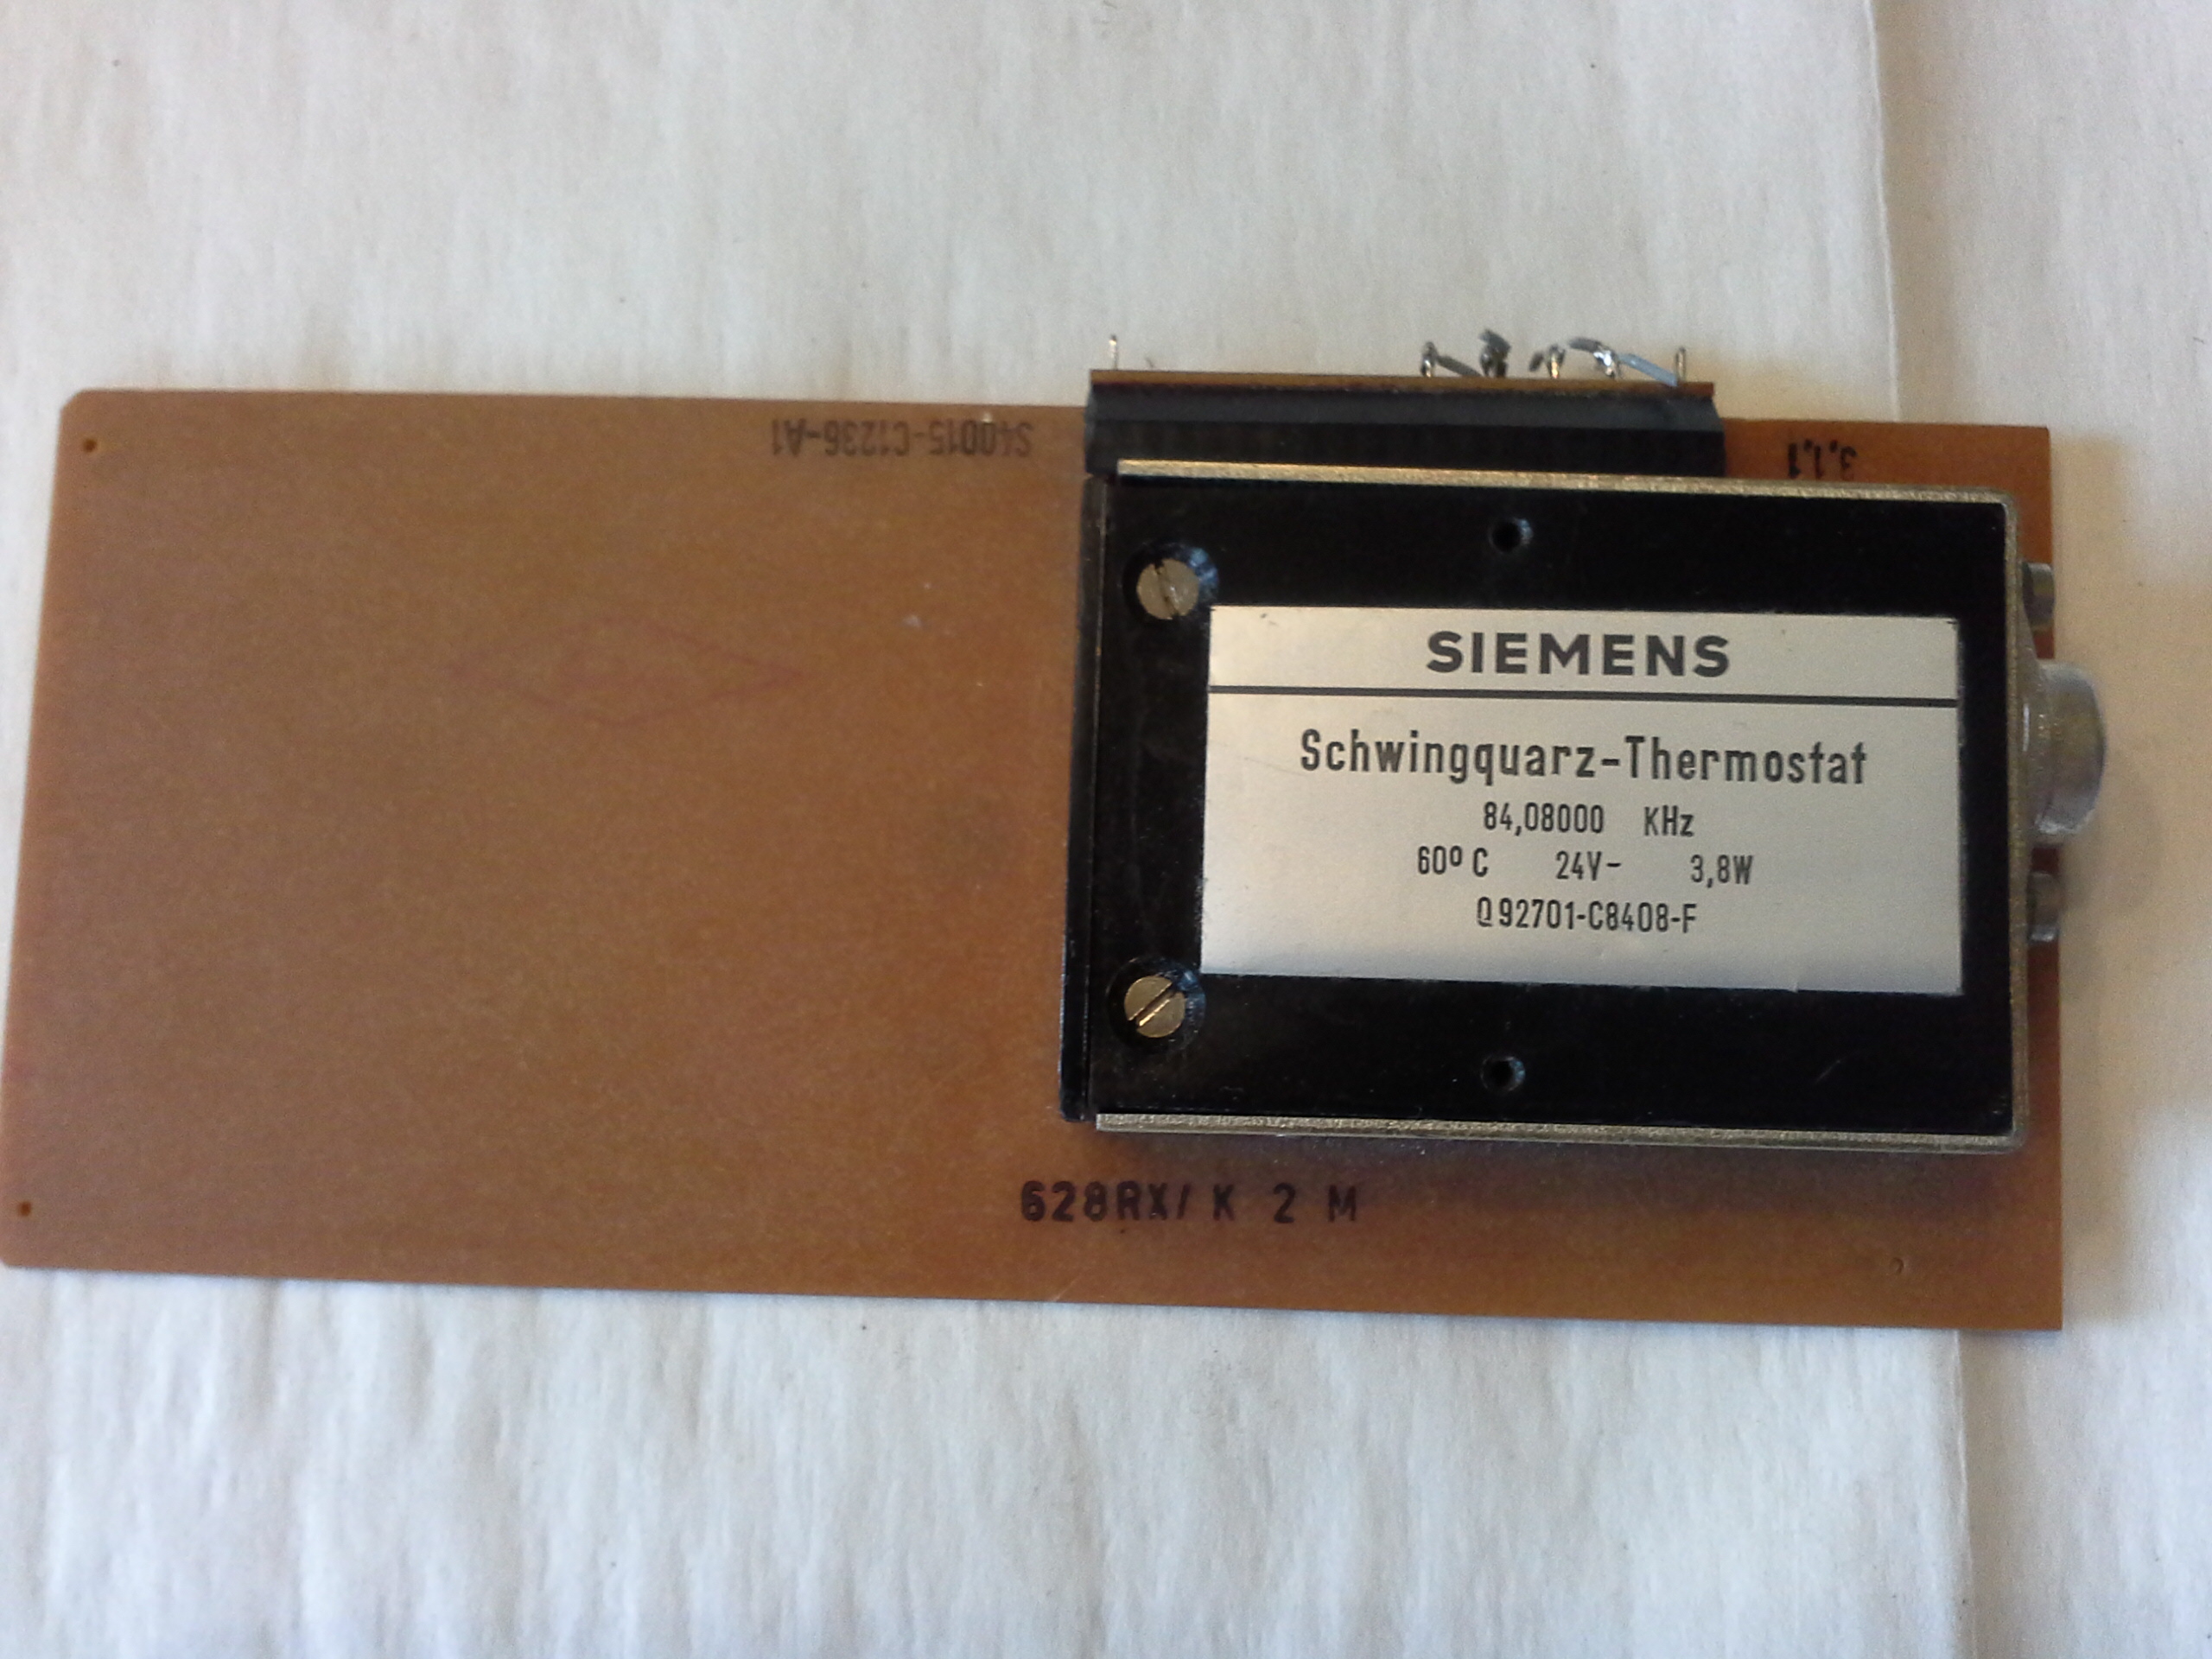 Siemens Schwingquarz-Thermostat 84,080 KHz